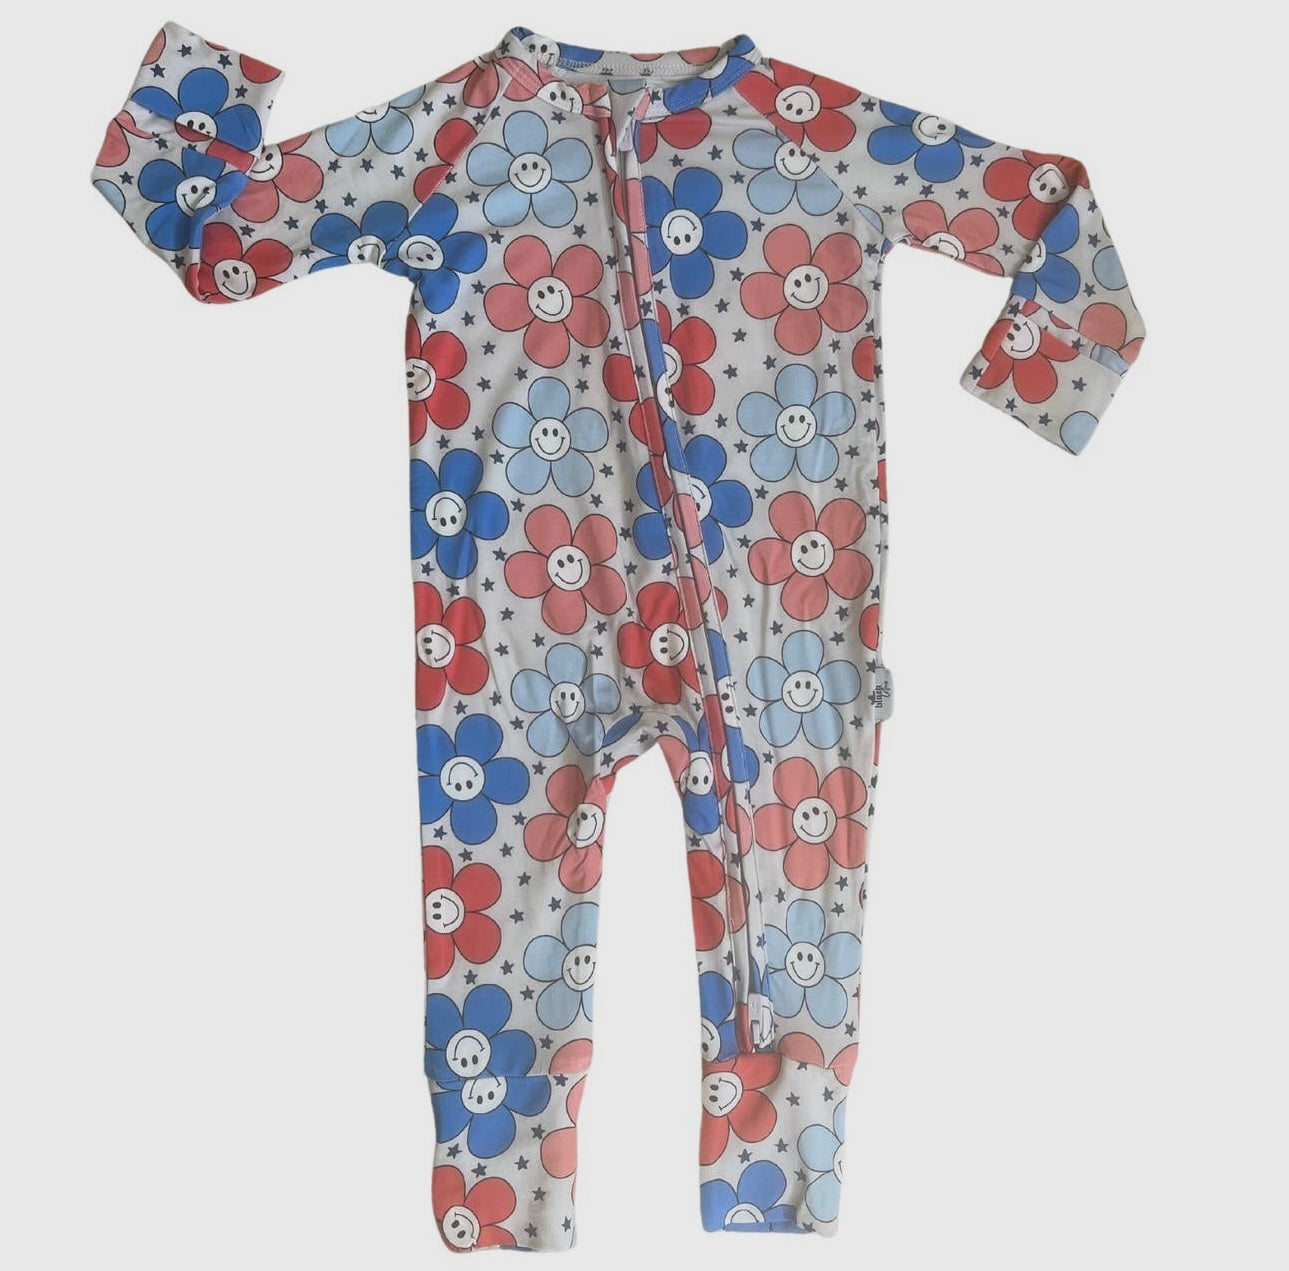 USA Daisy Bamboo Pajamas